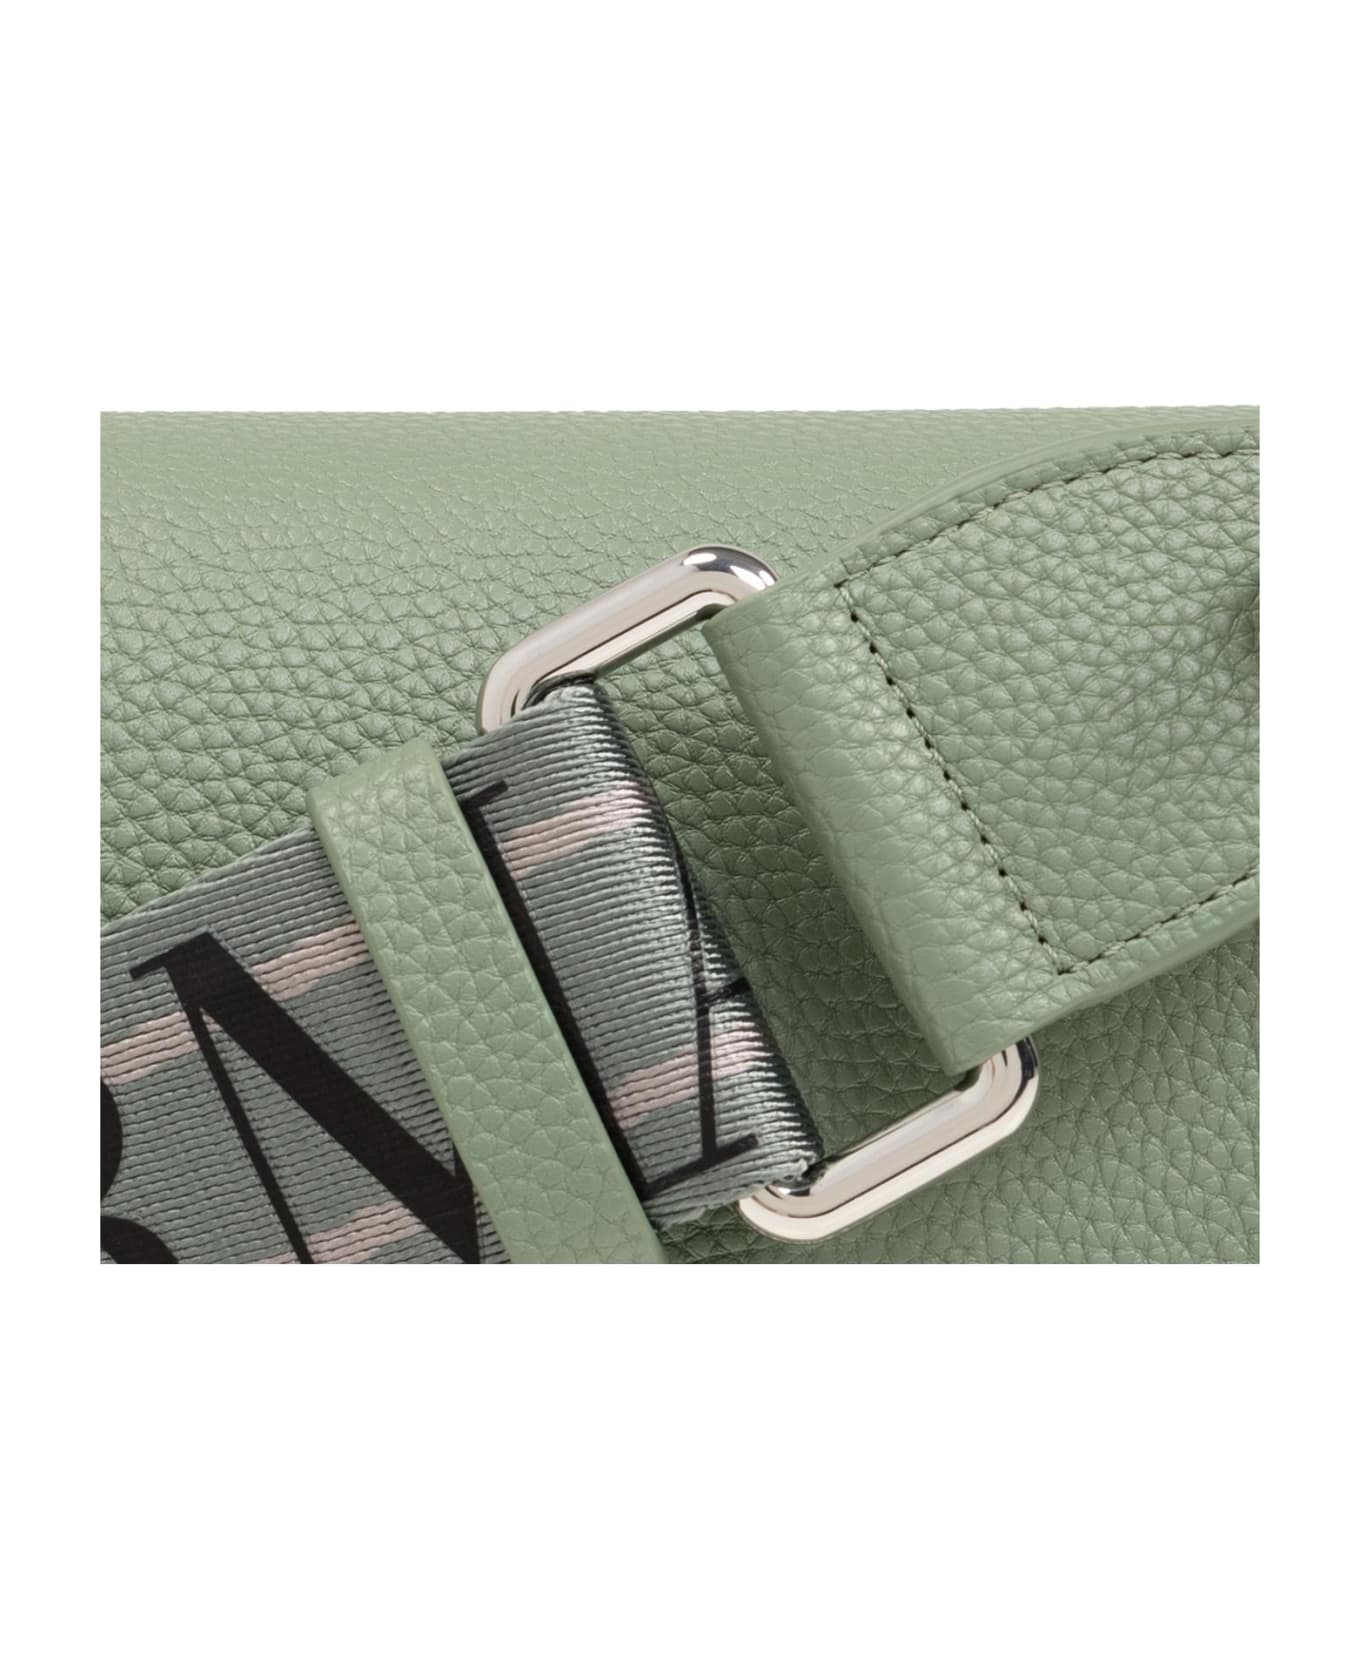 Emporio Armani Shoulder Bag With Logo - Salvia/Urban Chic